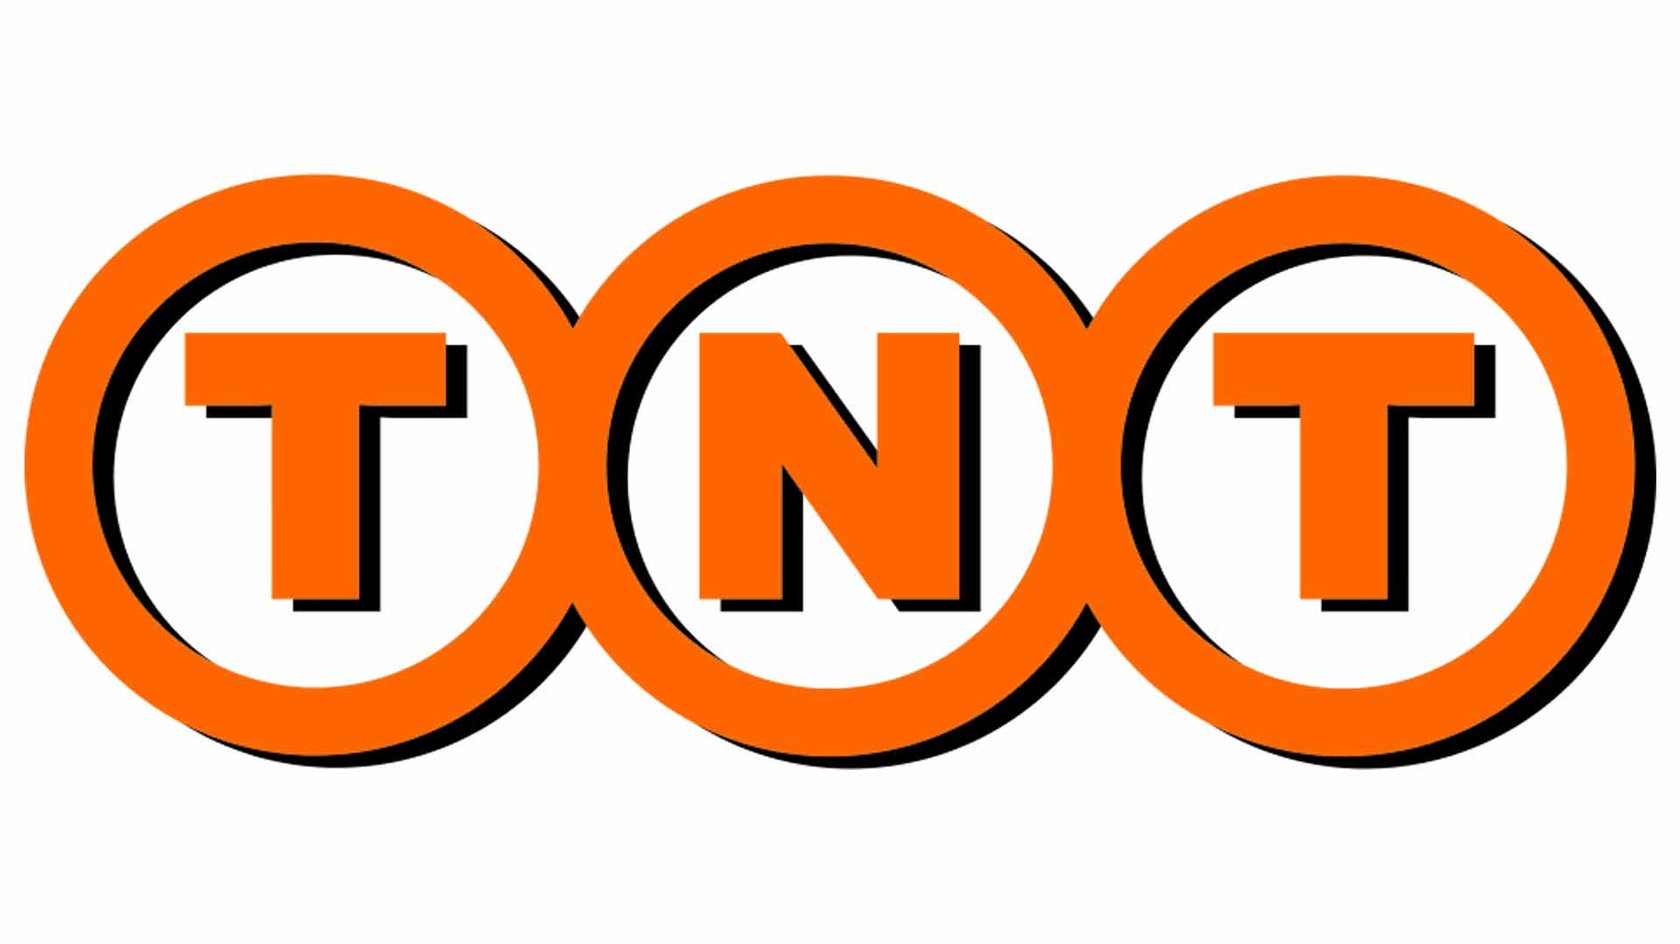 TNT Sendungsverfolgung und Paketverfolgung